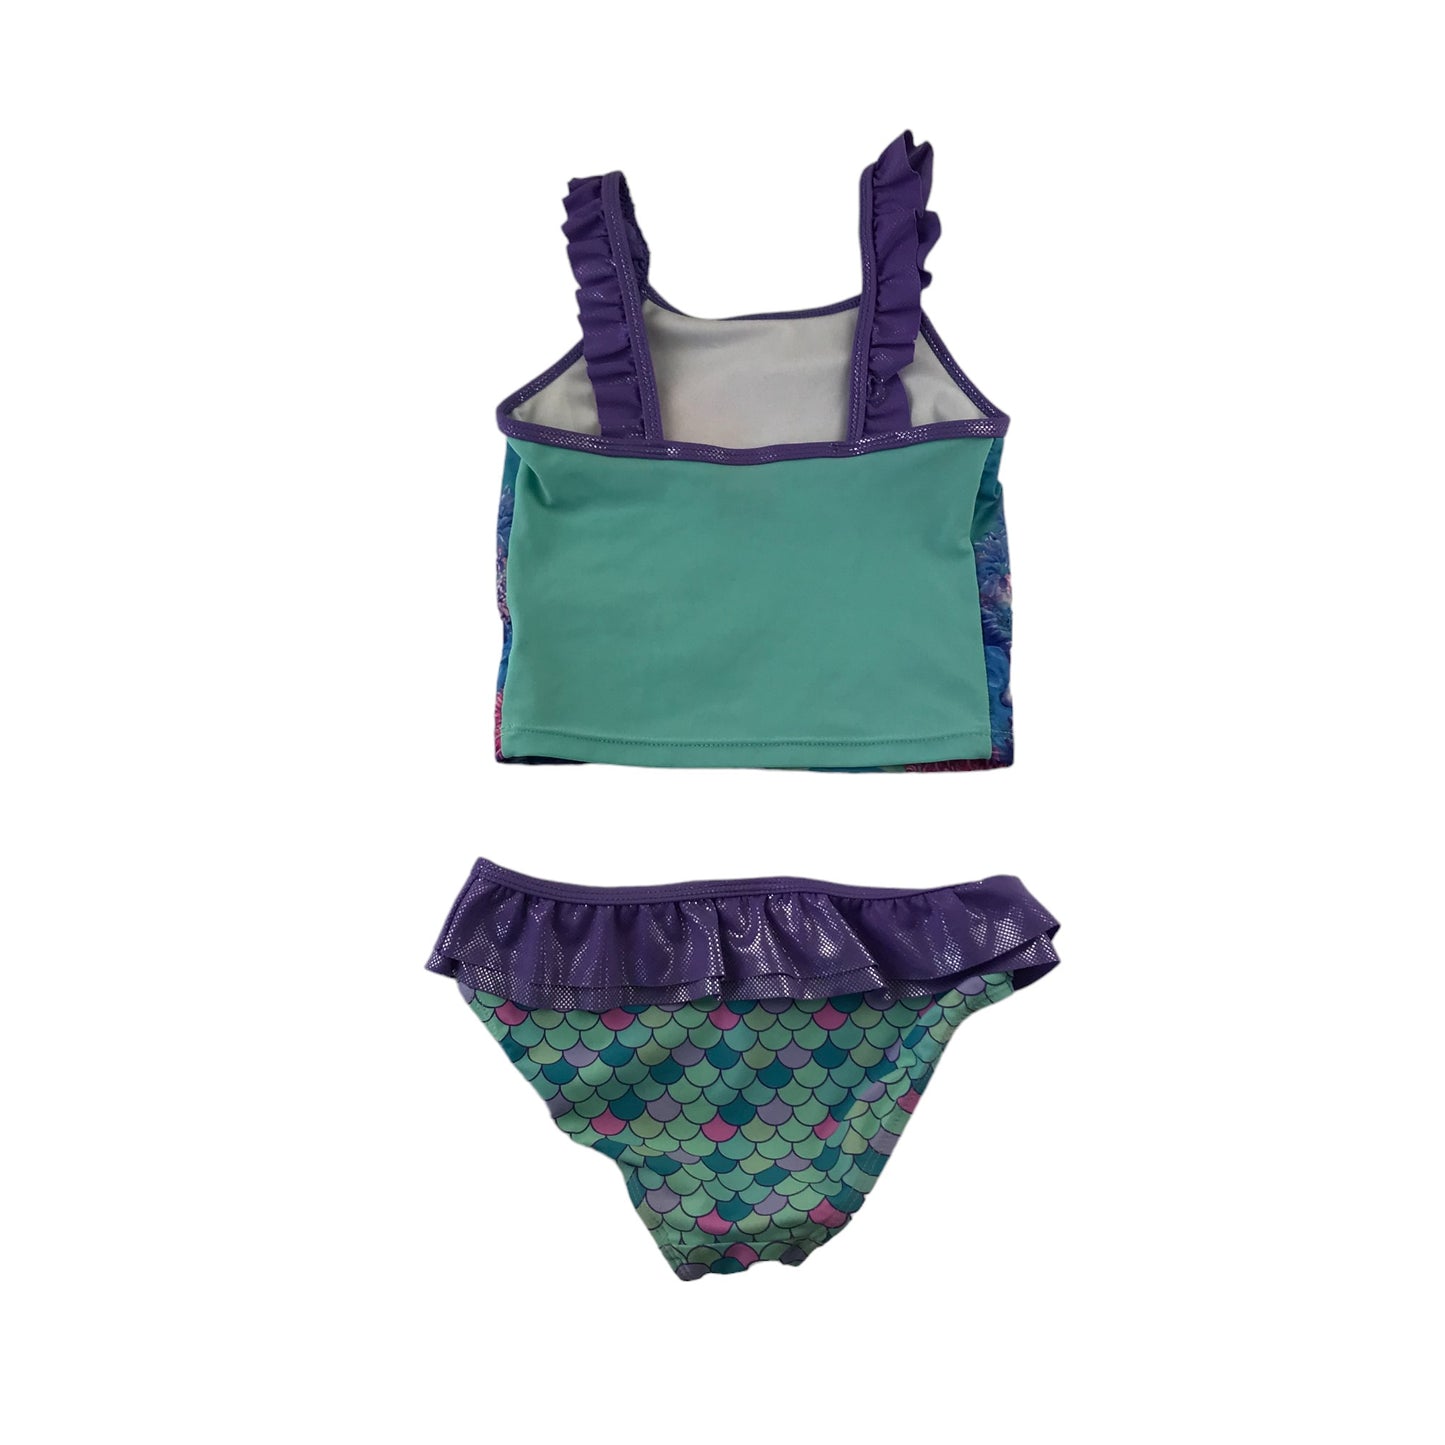 F&F swimsuit 5-6 years blue and purple Disney Ariel 2 piece swim costume